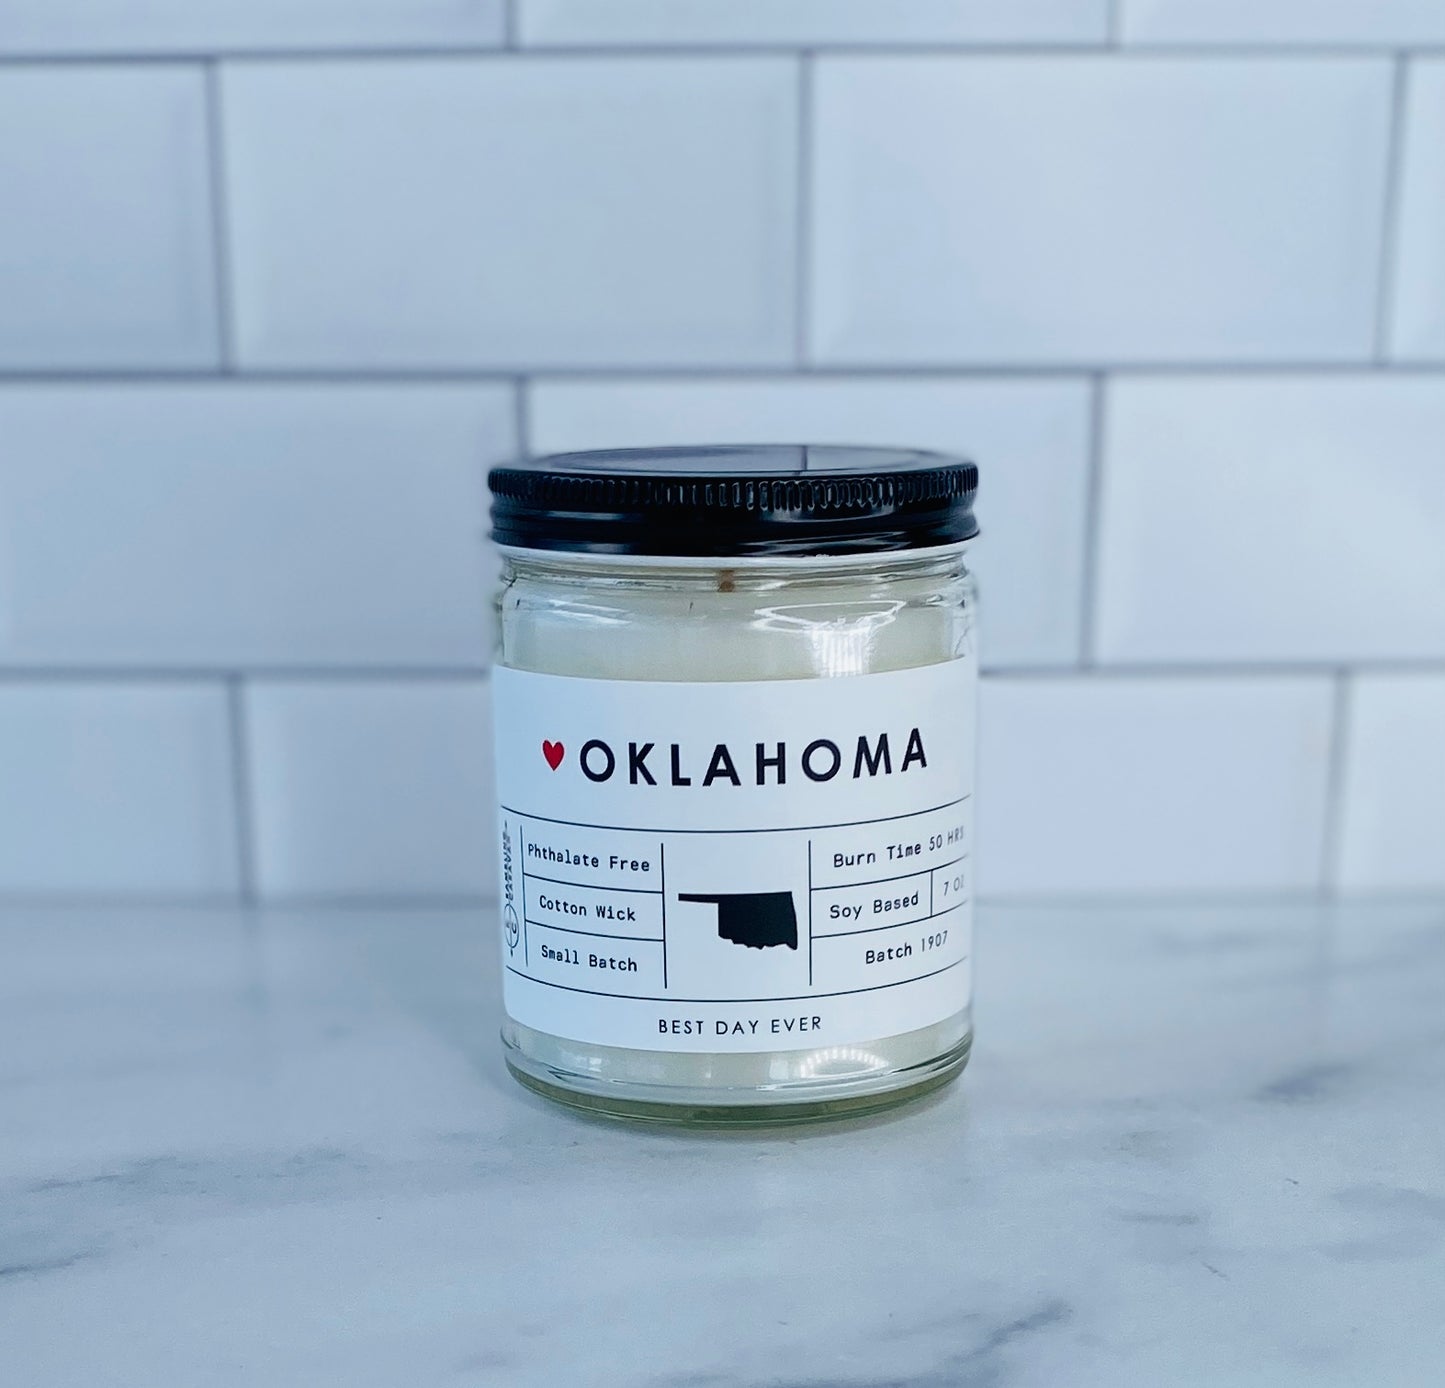 Oklahoma Candle